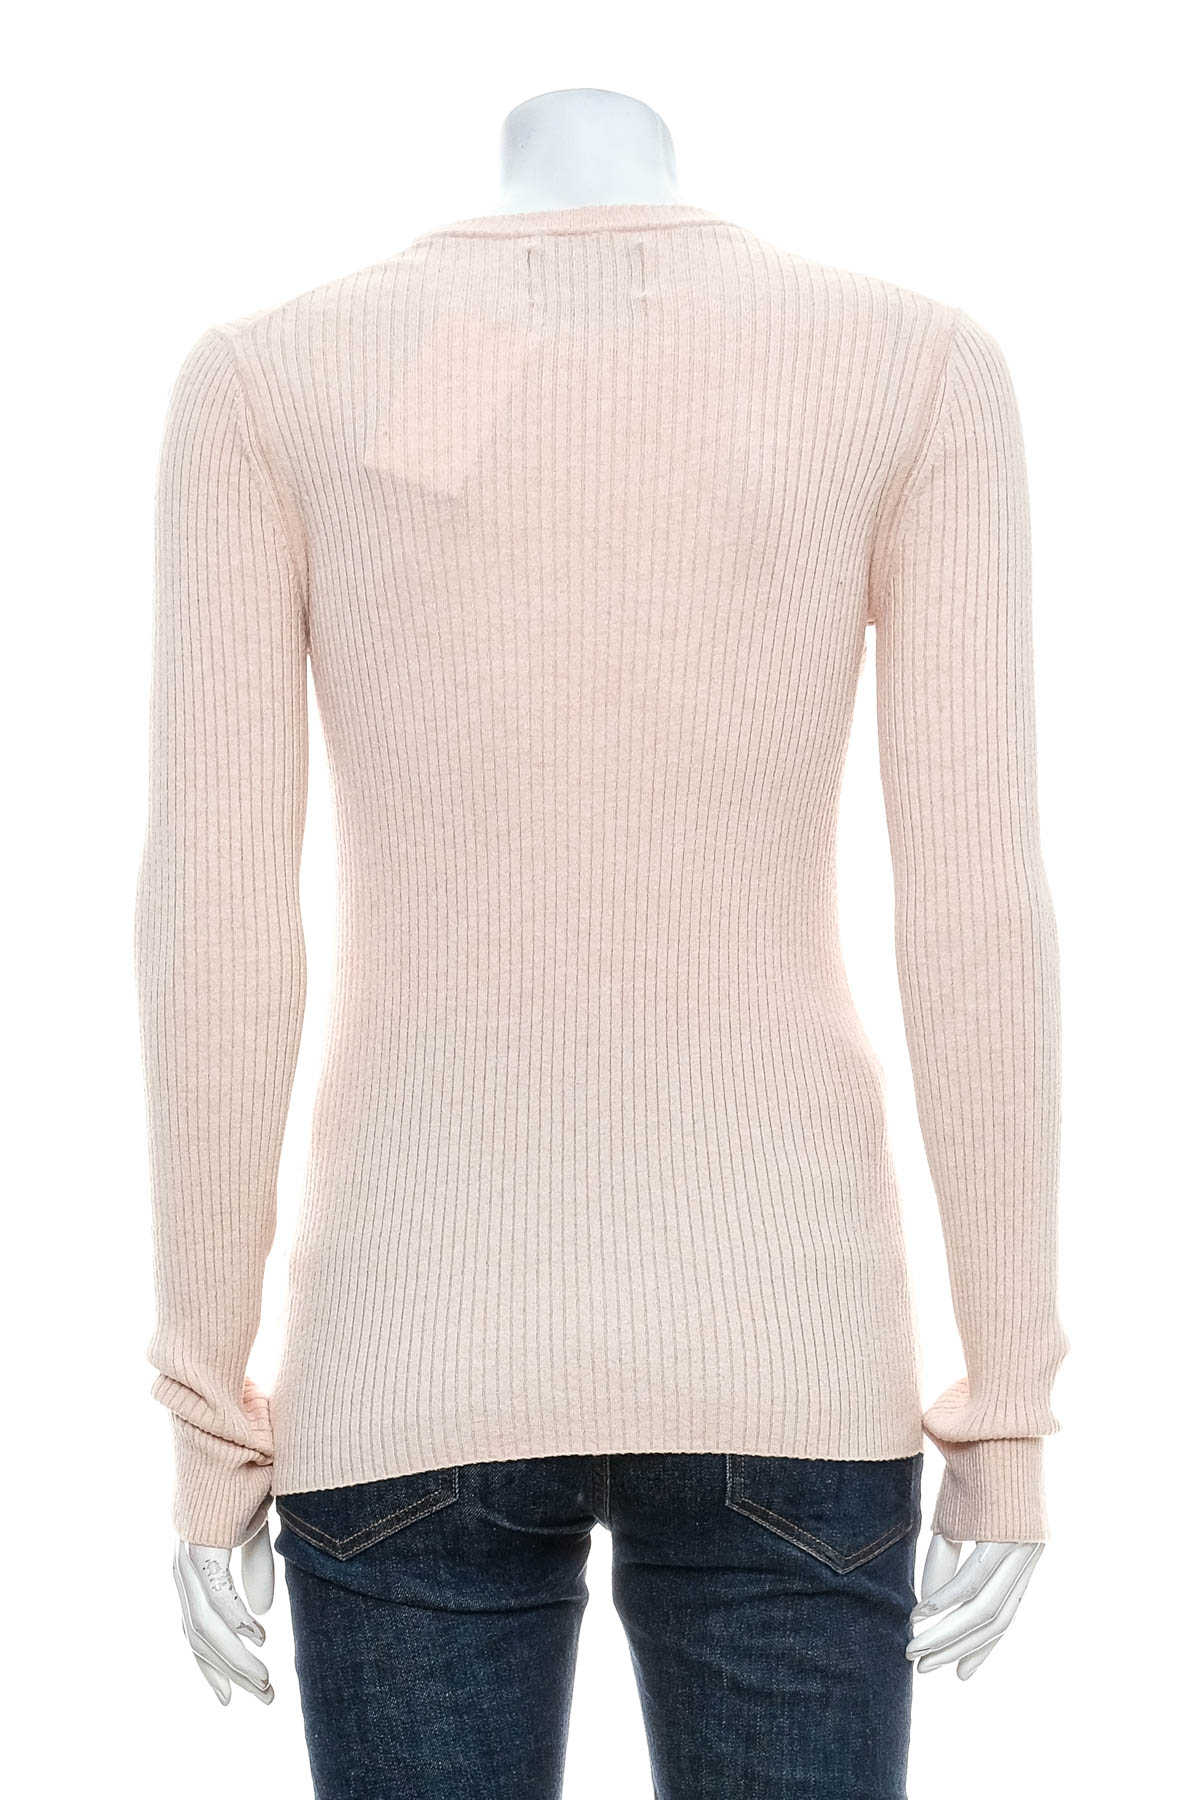 Women's sweater - Calvin Klein Jeans - 1